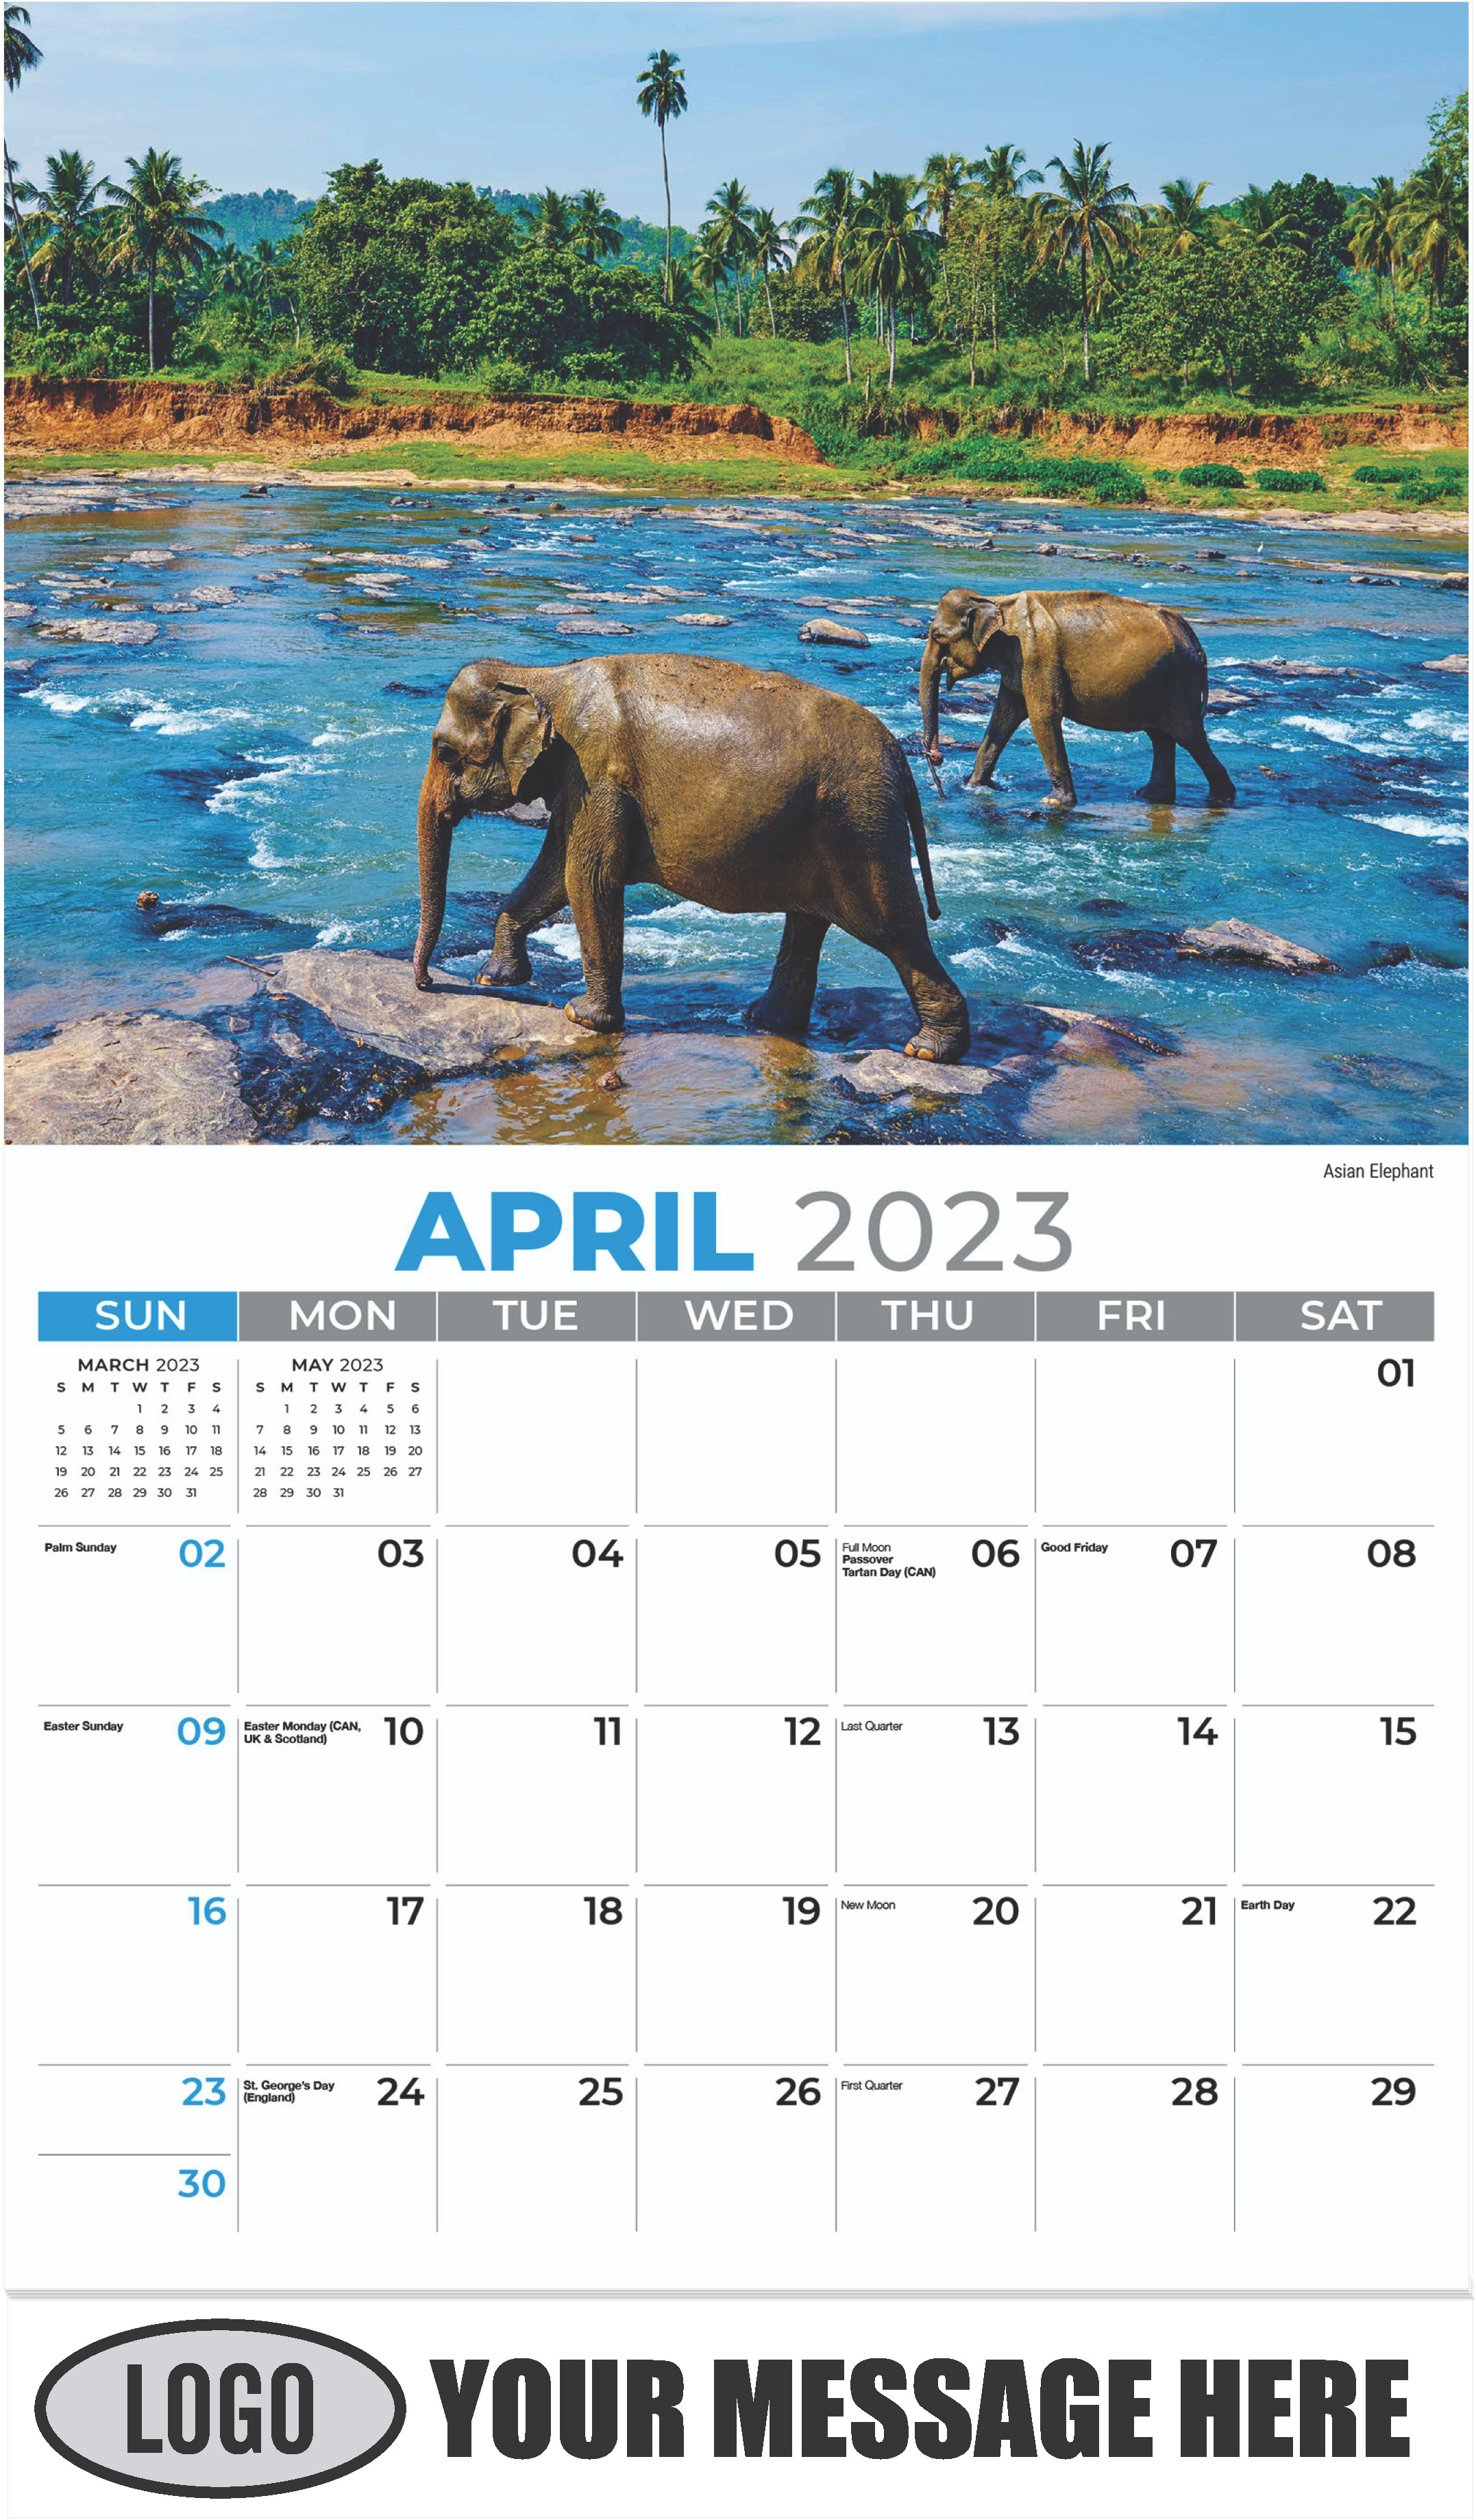 Asian Elephant - April - International Wildlife 2023 Promotional Calendar